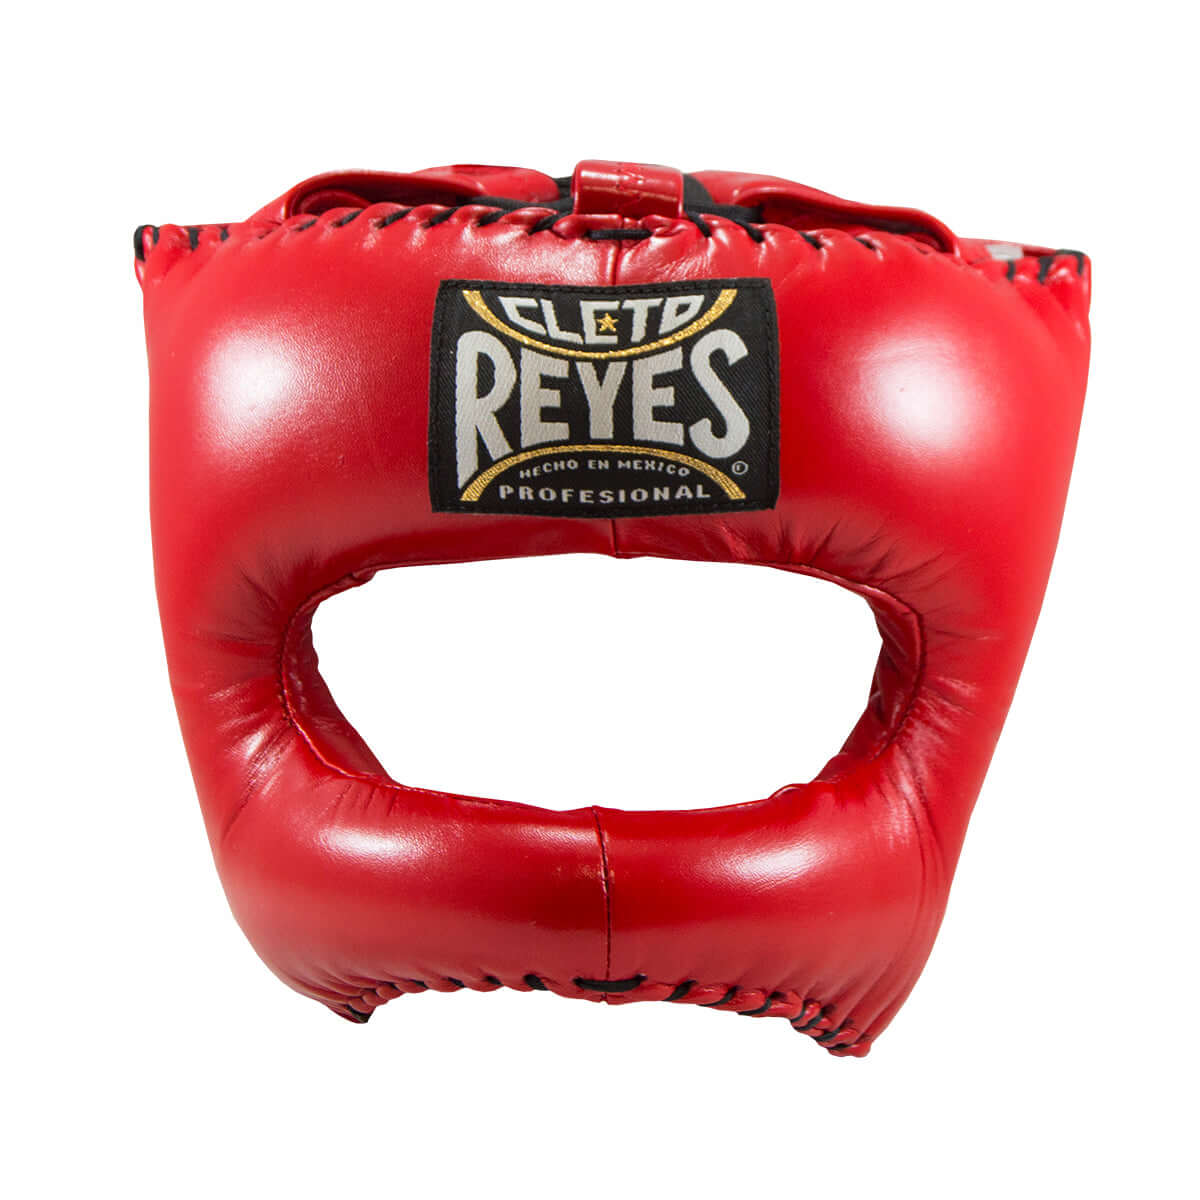 Cleto Reyes Traditional Facebar Headgear